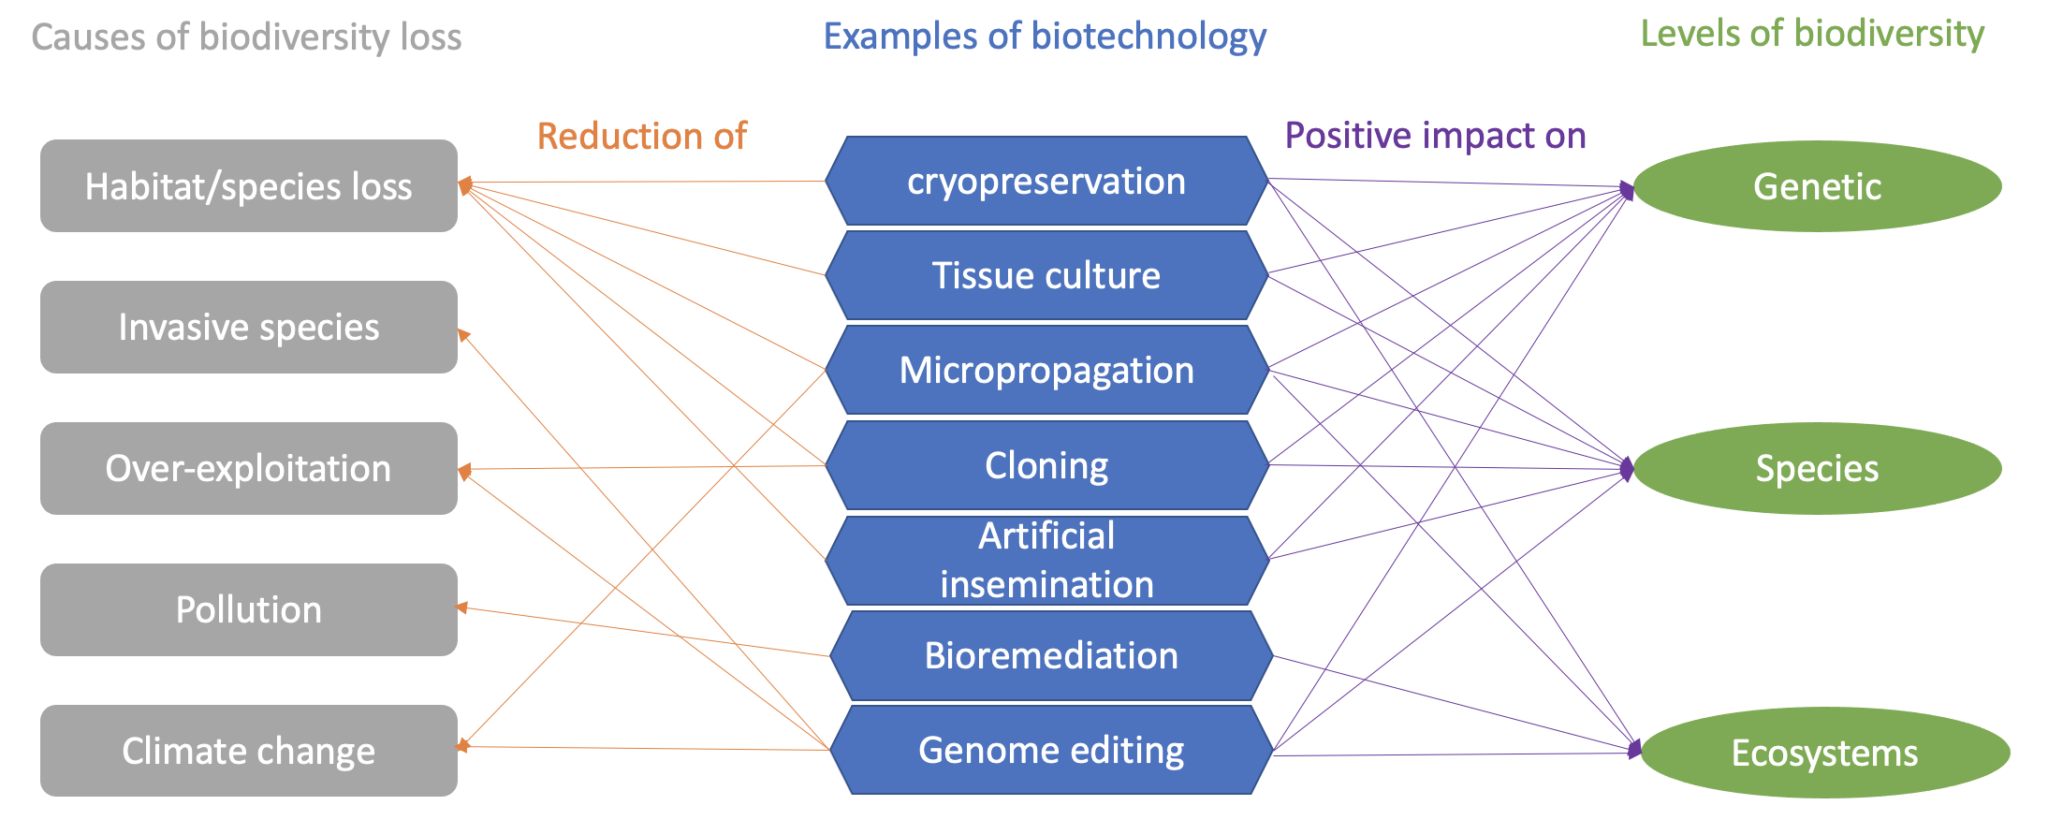 How biotech aids biodiversity